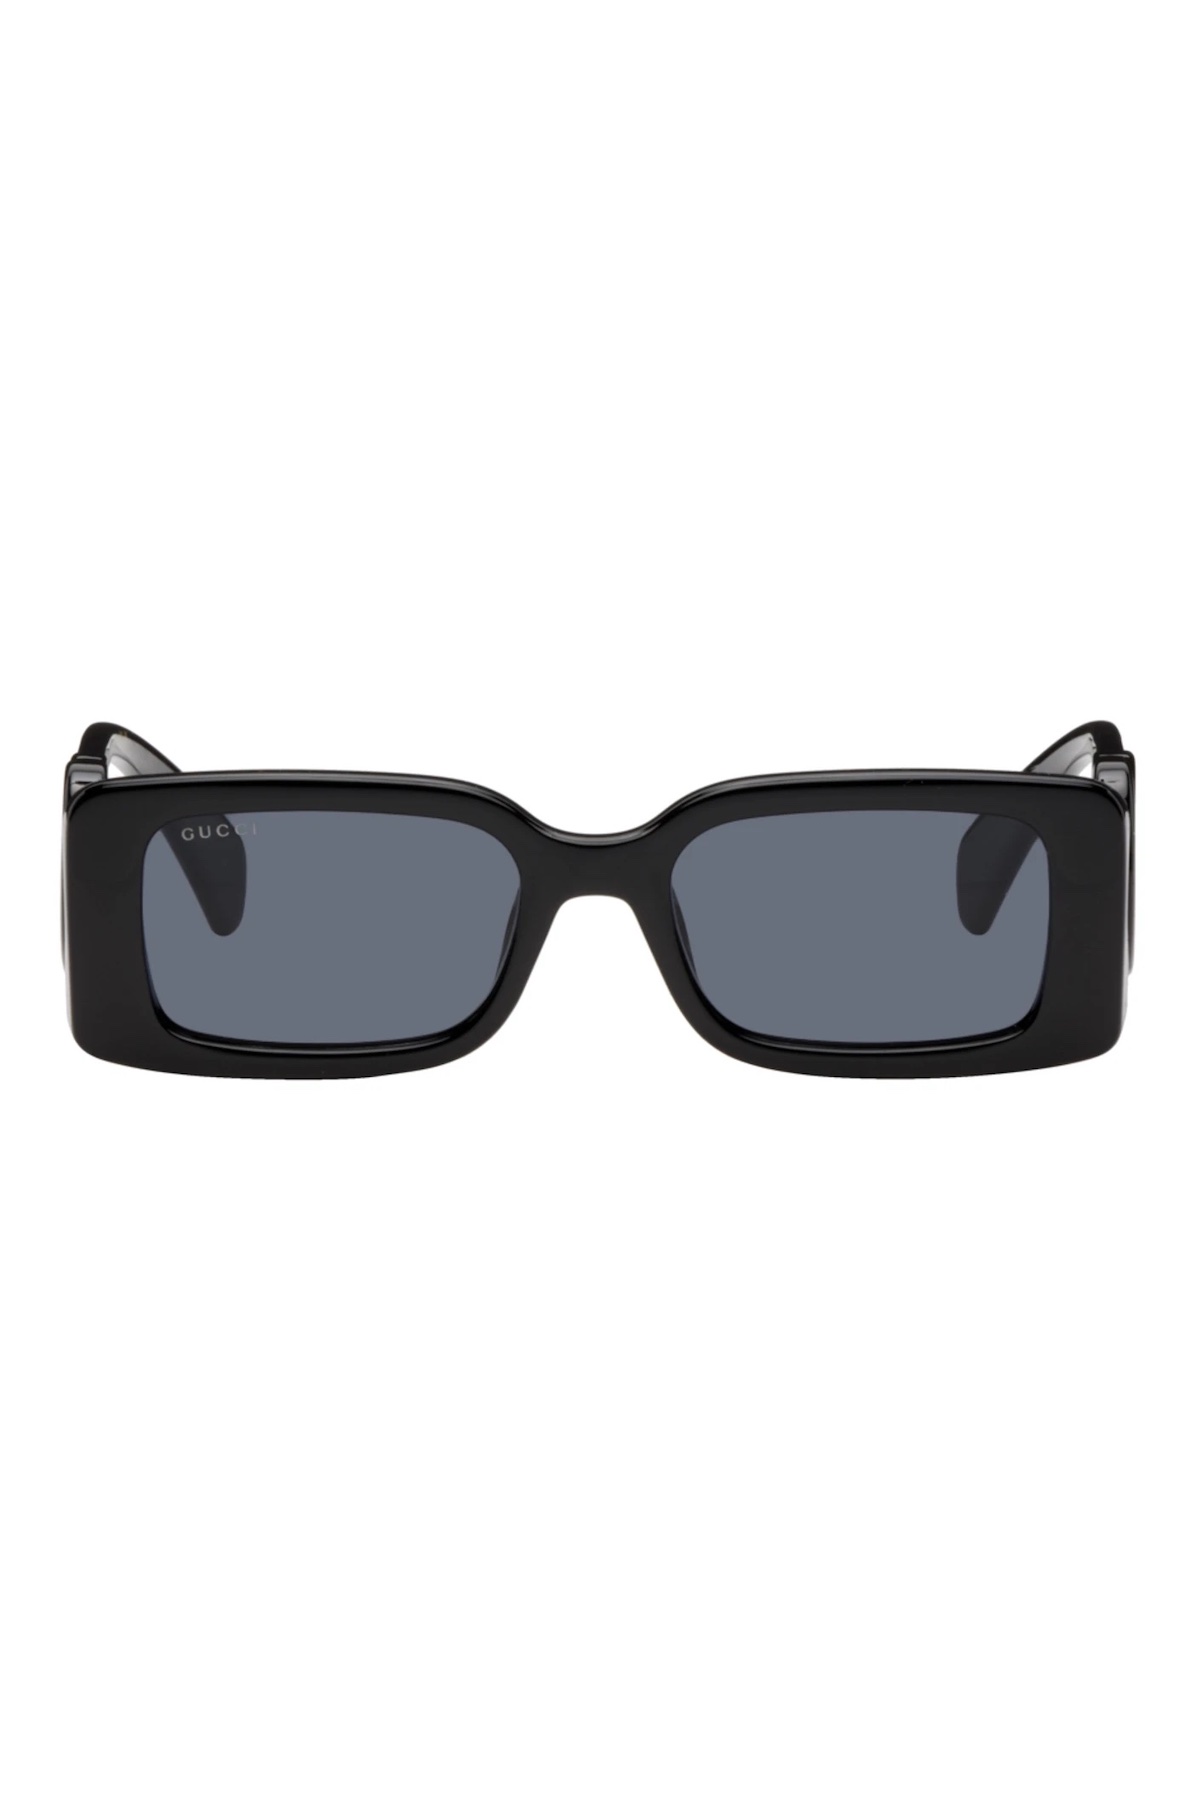 Sunglasses Eyewear WeLoveGlasses Shop Buy Online Trend Influencers Black Velvet Canyon